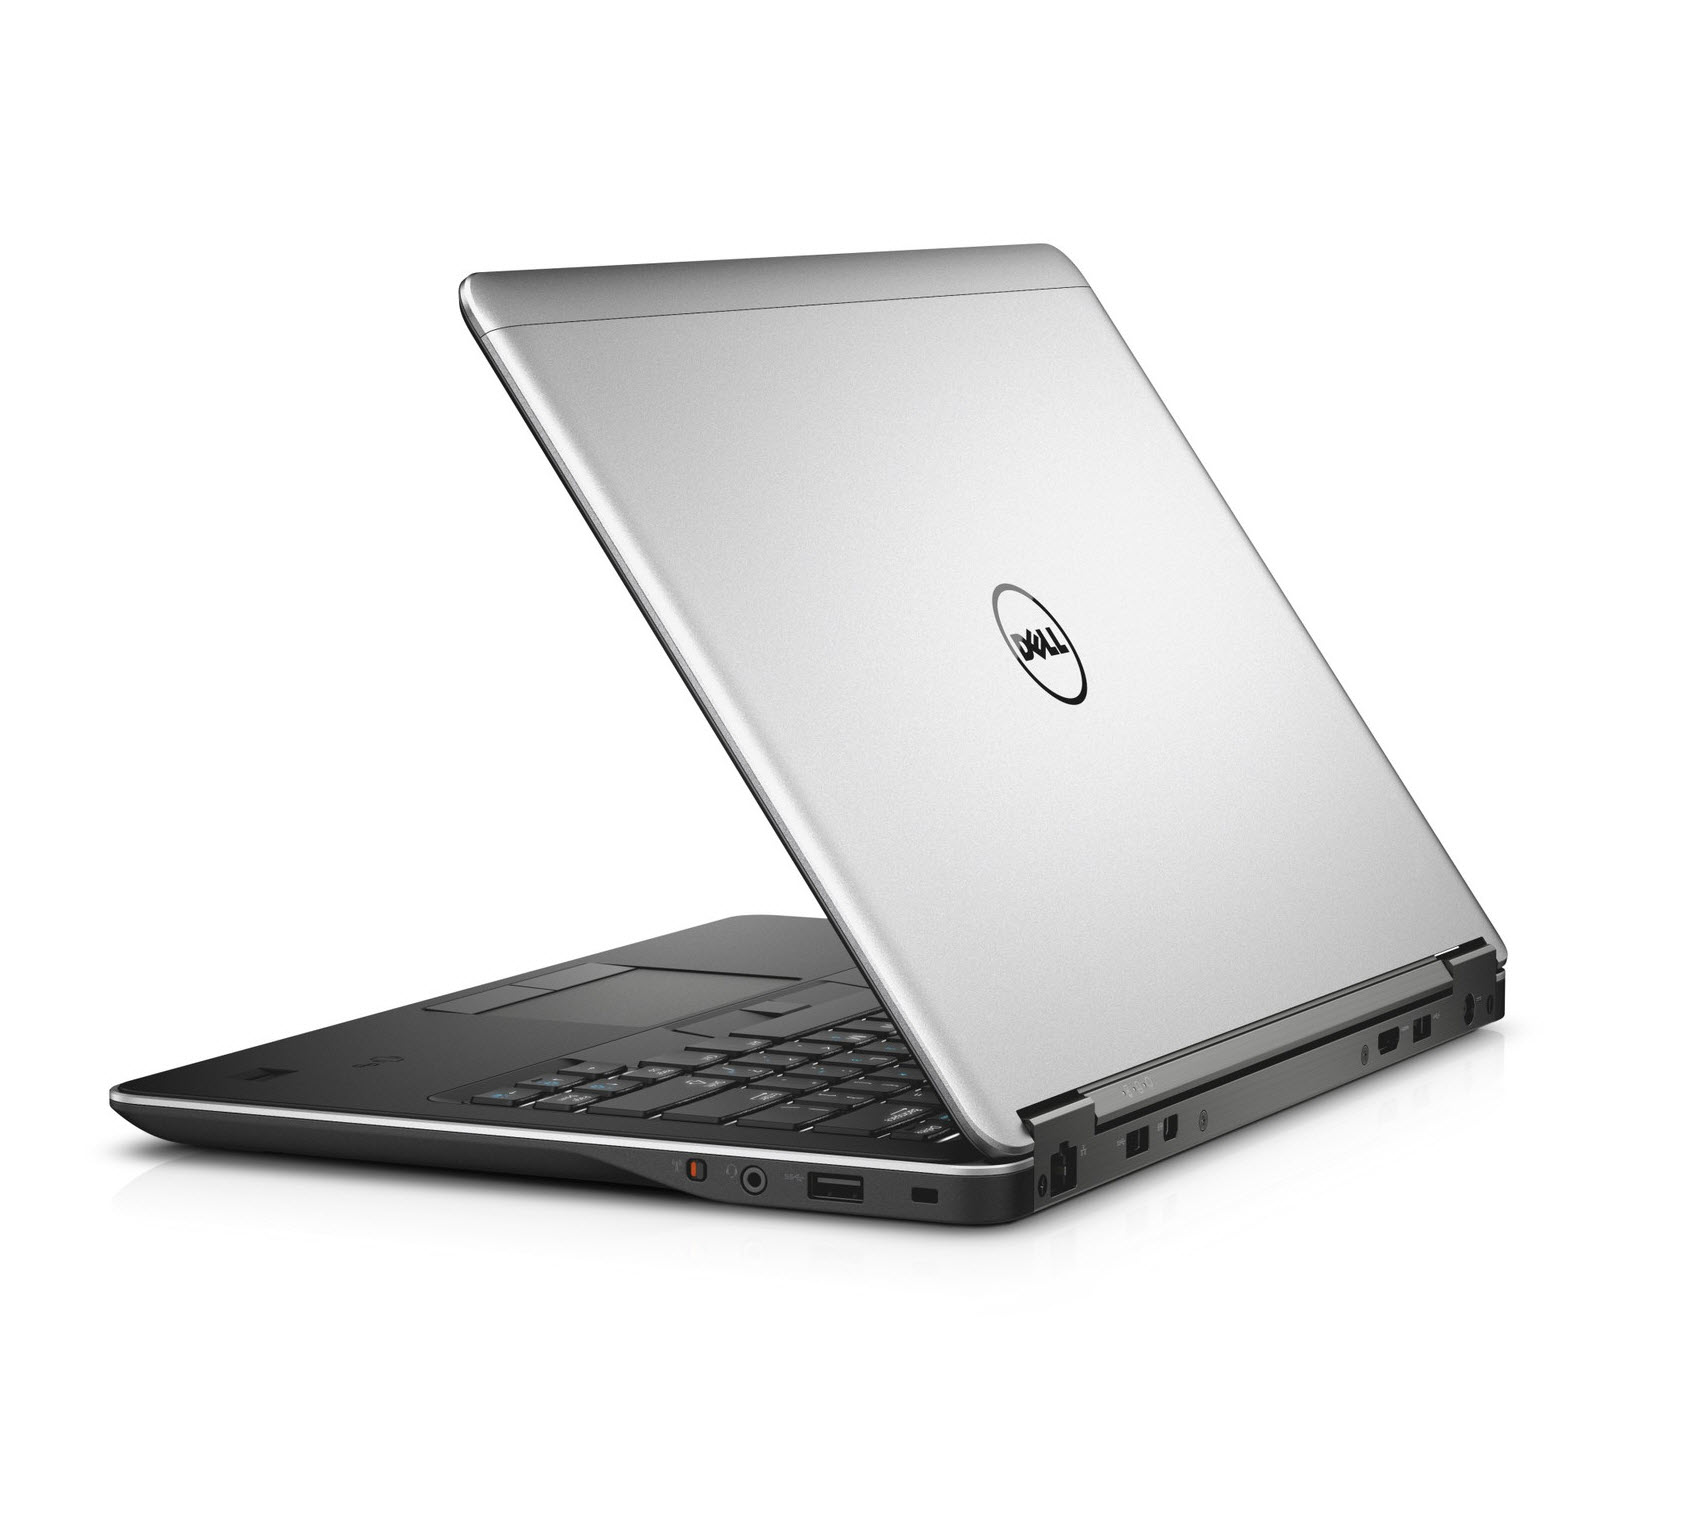 Thay vỏ Laptop Dell Latitude E7440 - Laptopcentre : Sửa chữa - Mua bán  LAPTOP giá rẻ